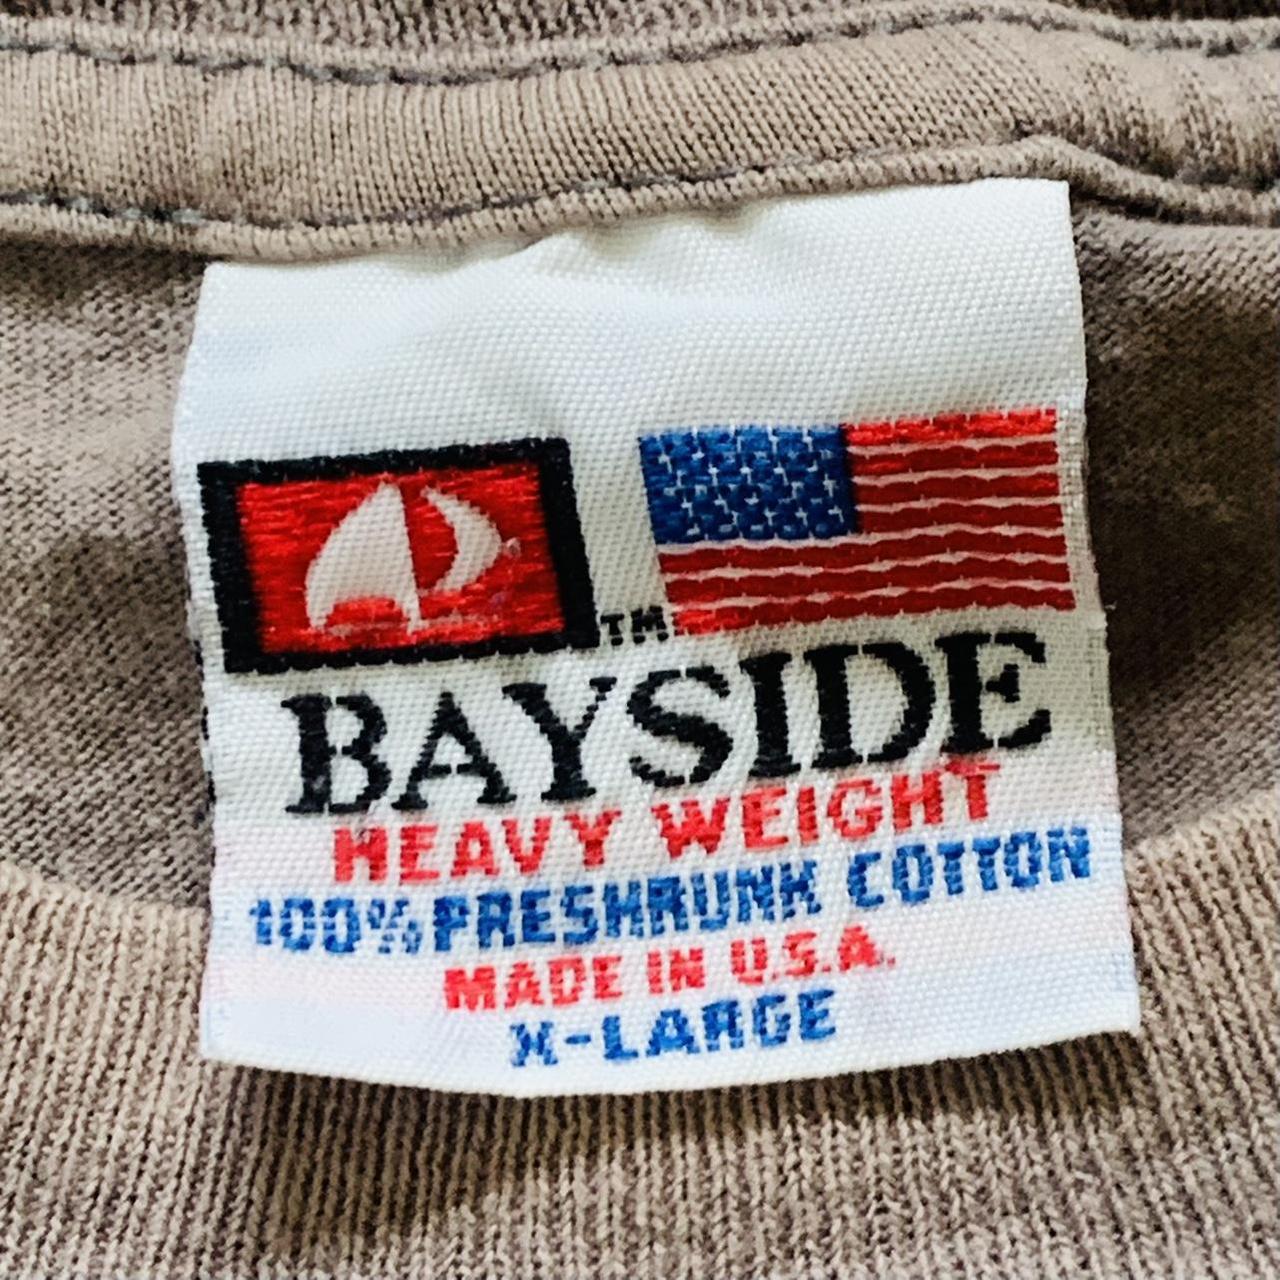 Vintage BAYSIDE Heavyweight Longshoremen Printed T... - Depop